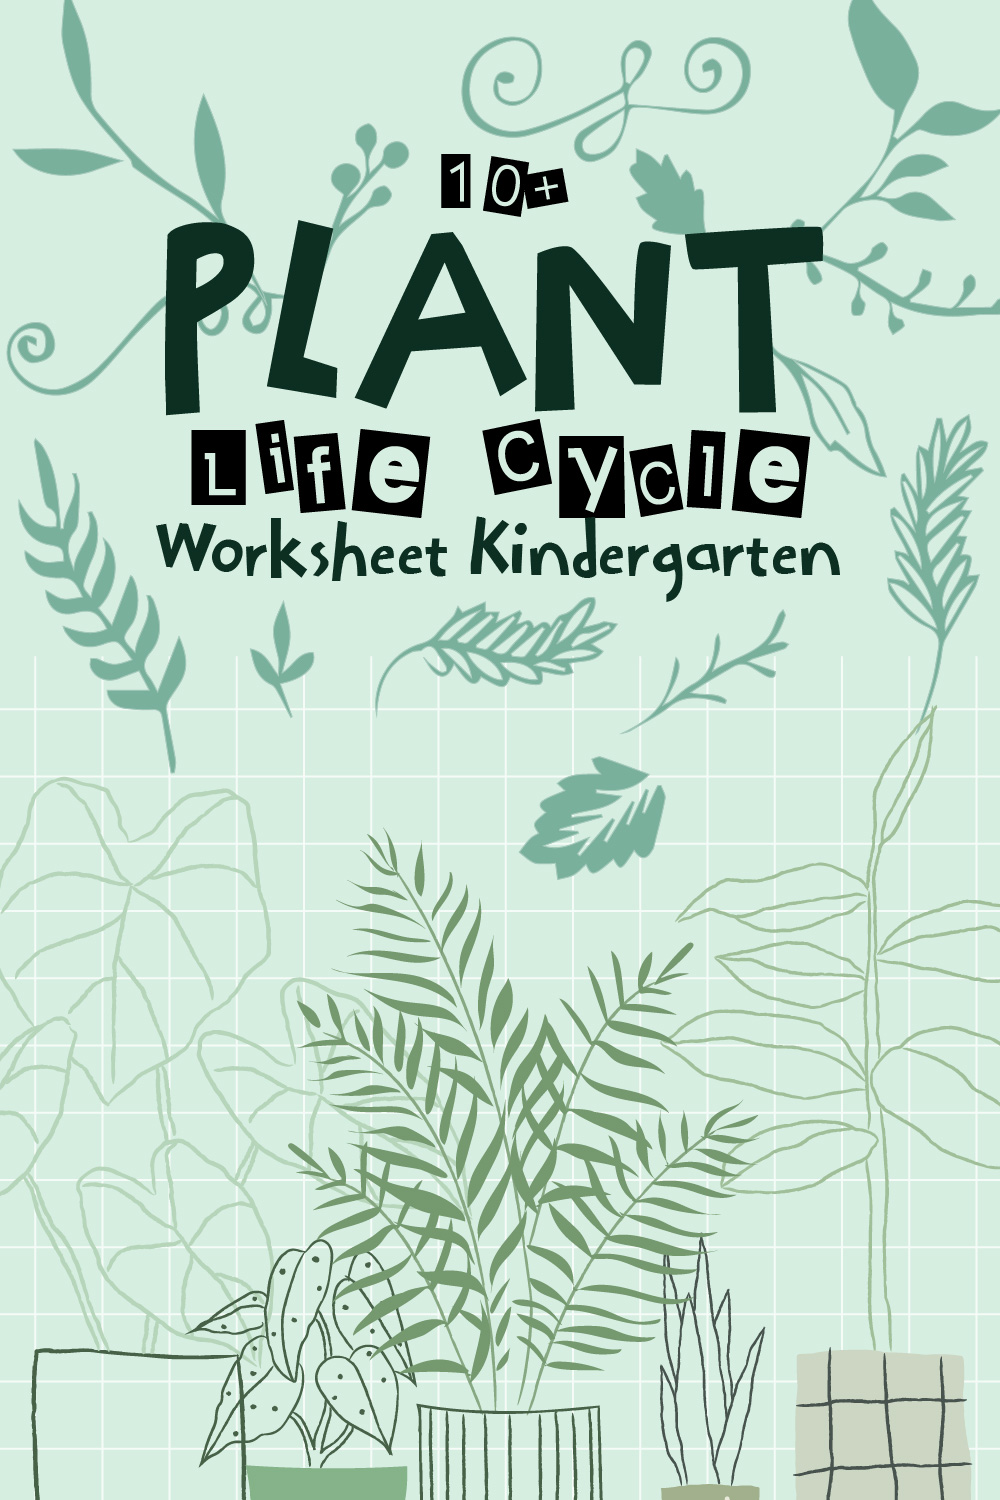 14 Images of Plant Life Cycle Worksheet Kindergarten